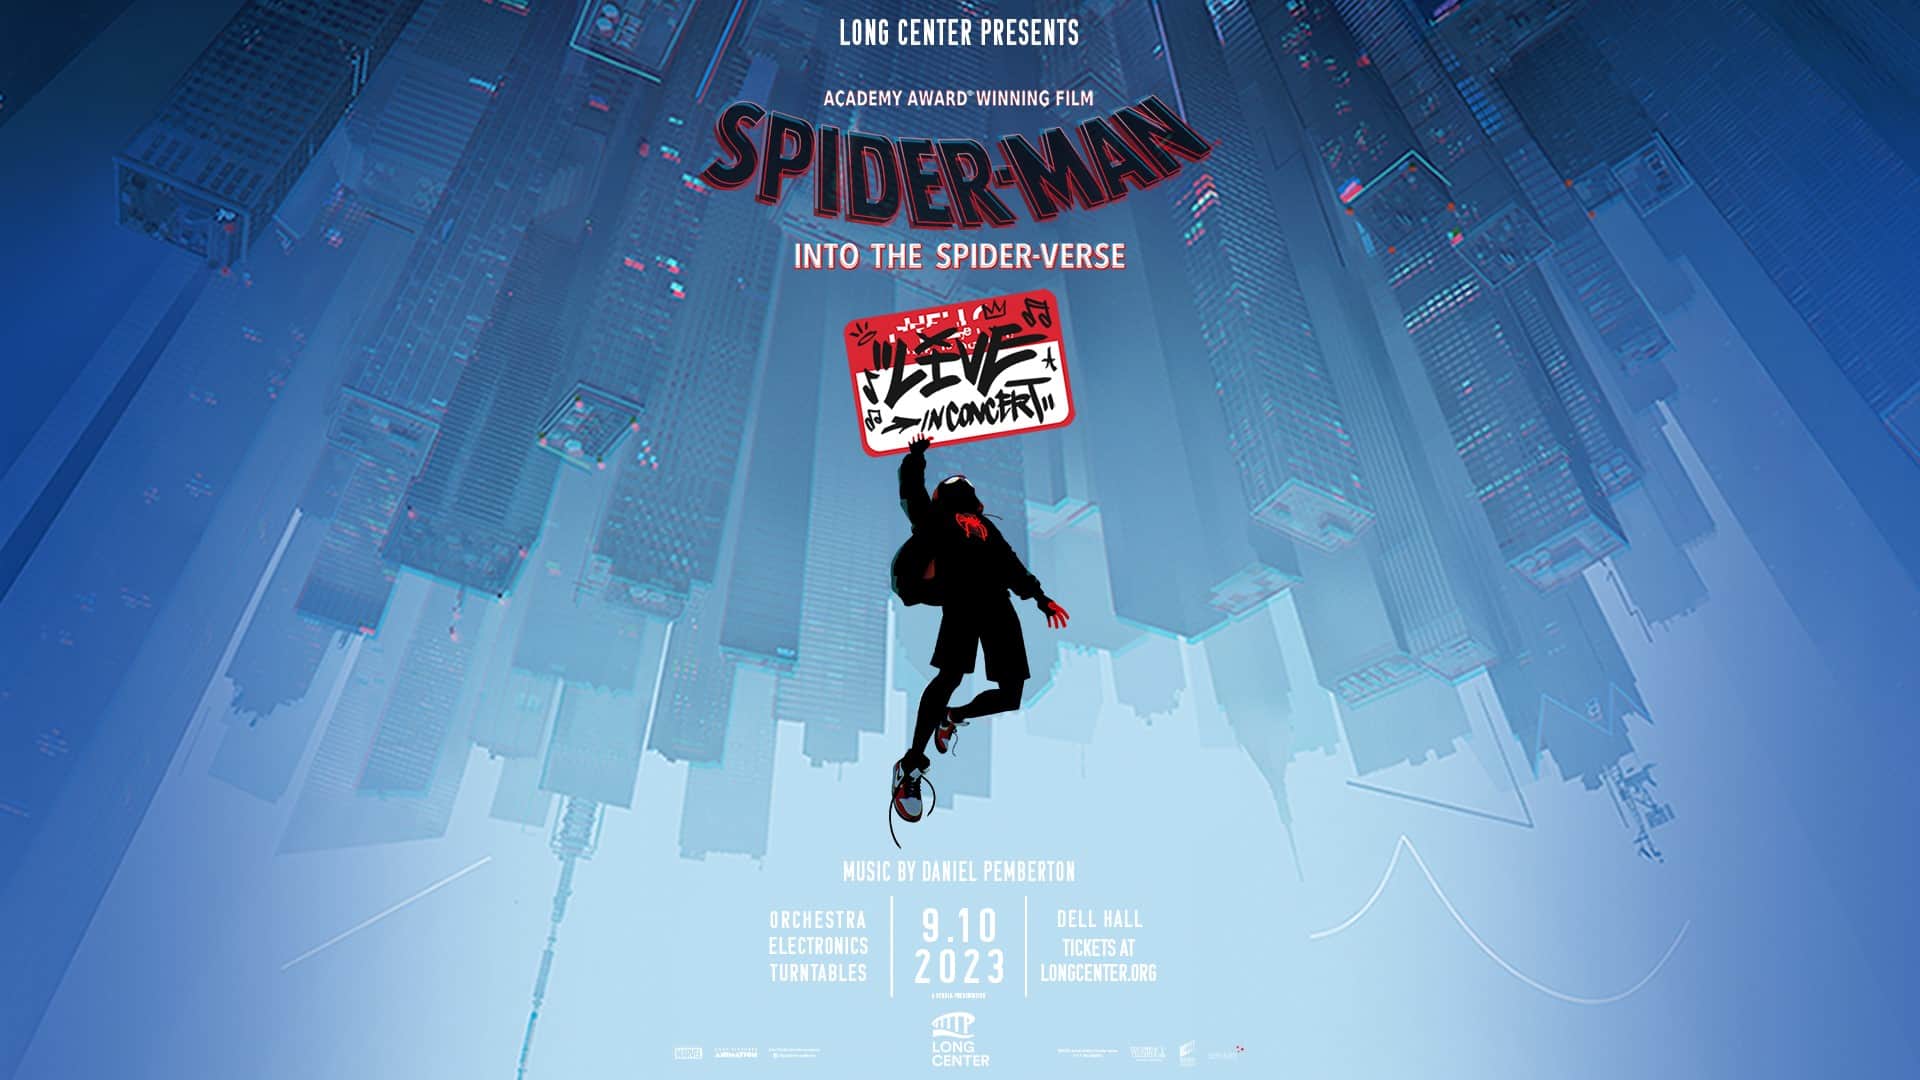 Daniel Pemberton - Spider-Man: Across the Spider-Verse (Original Score) -   Music